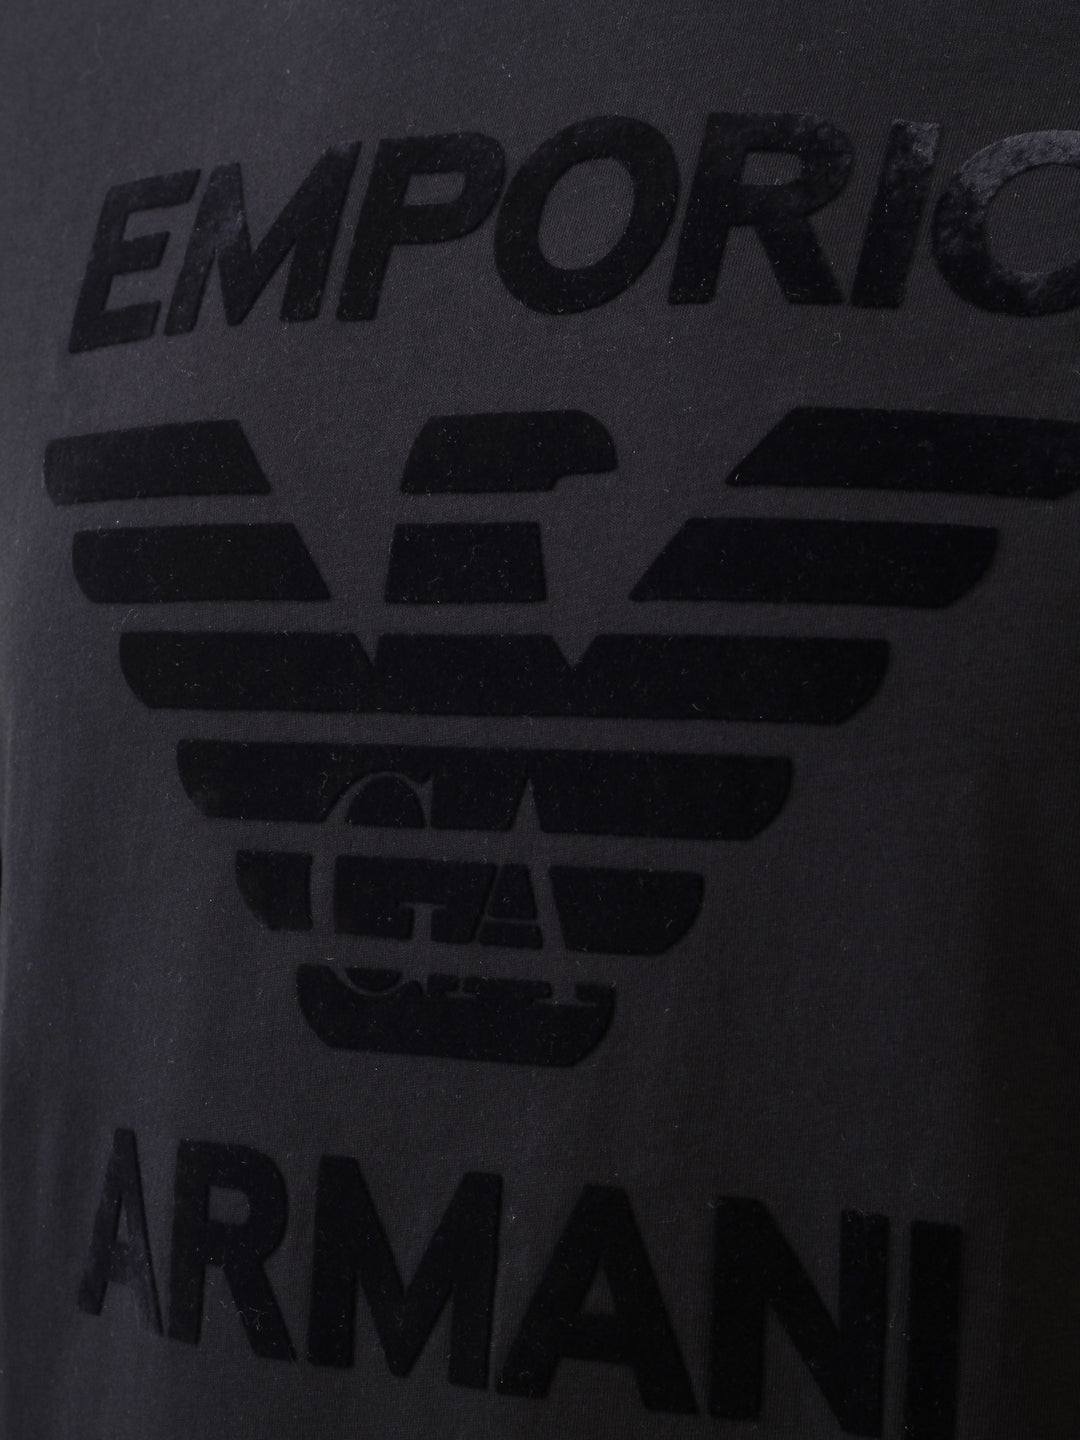 Armani Mens S/S R-Neck T-Shirt 7V1TDO1JSAZ